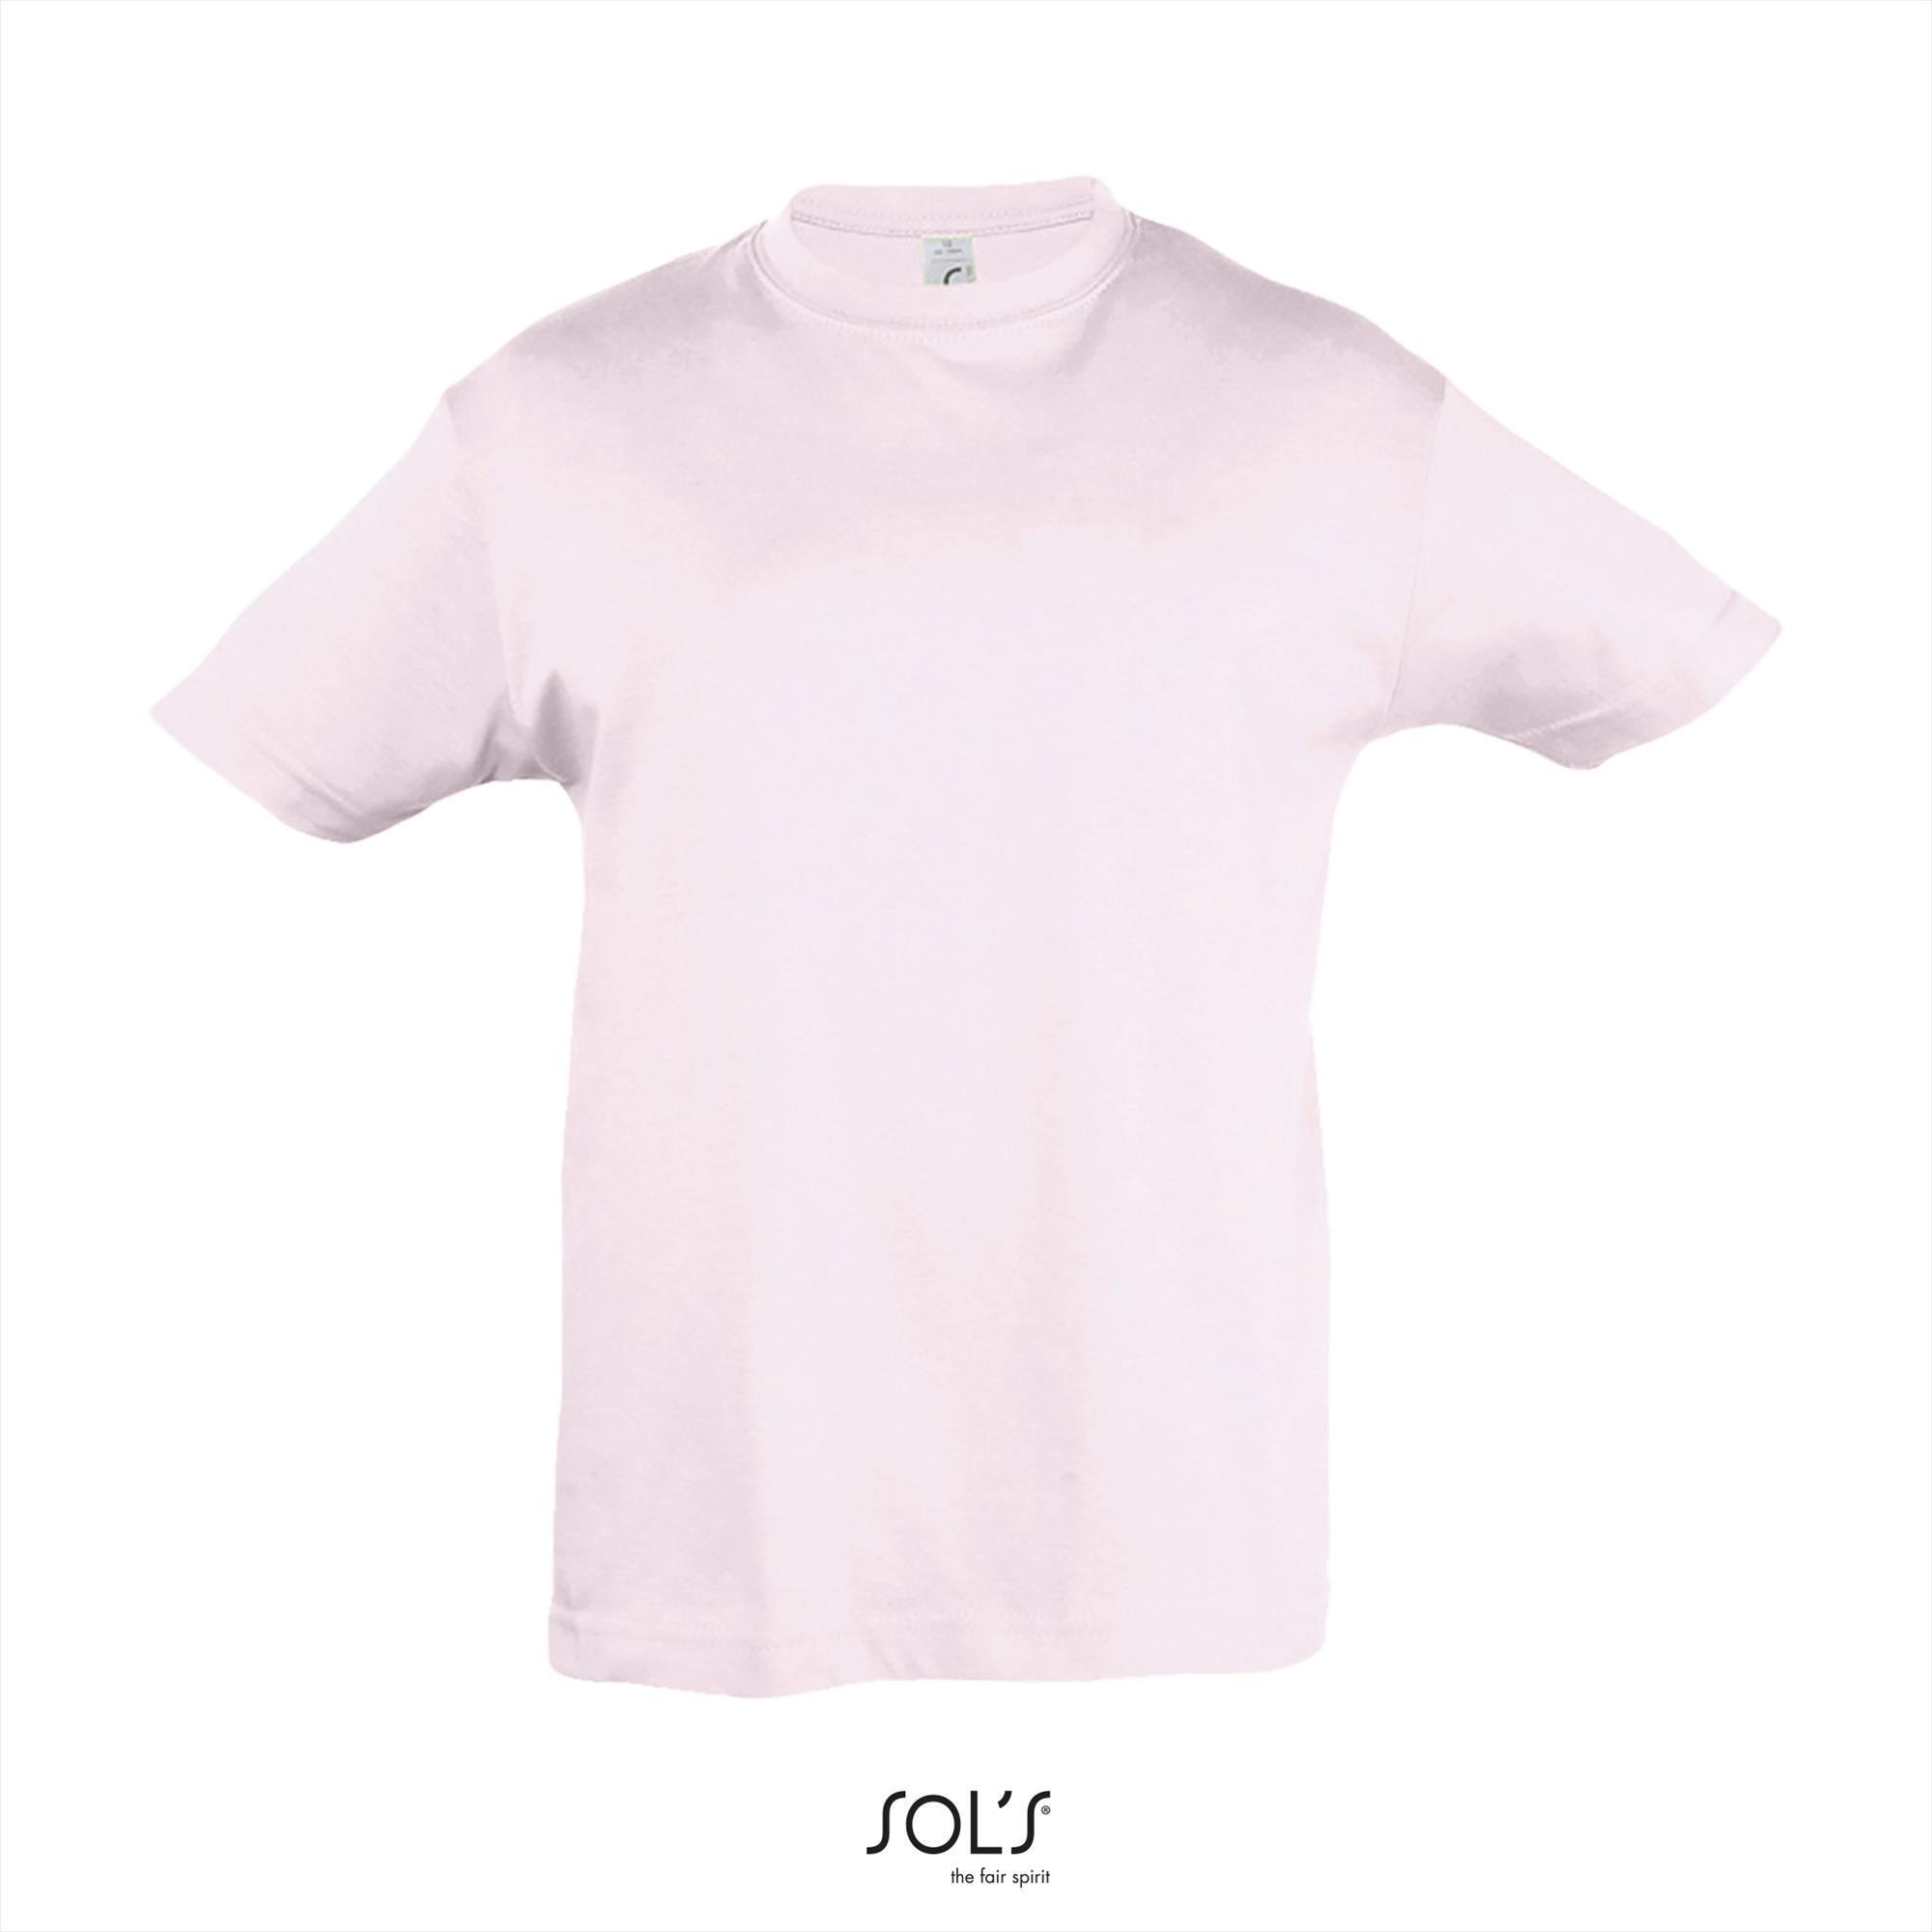 Klassiek kinder T-shirt roze